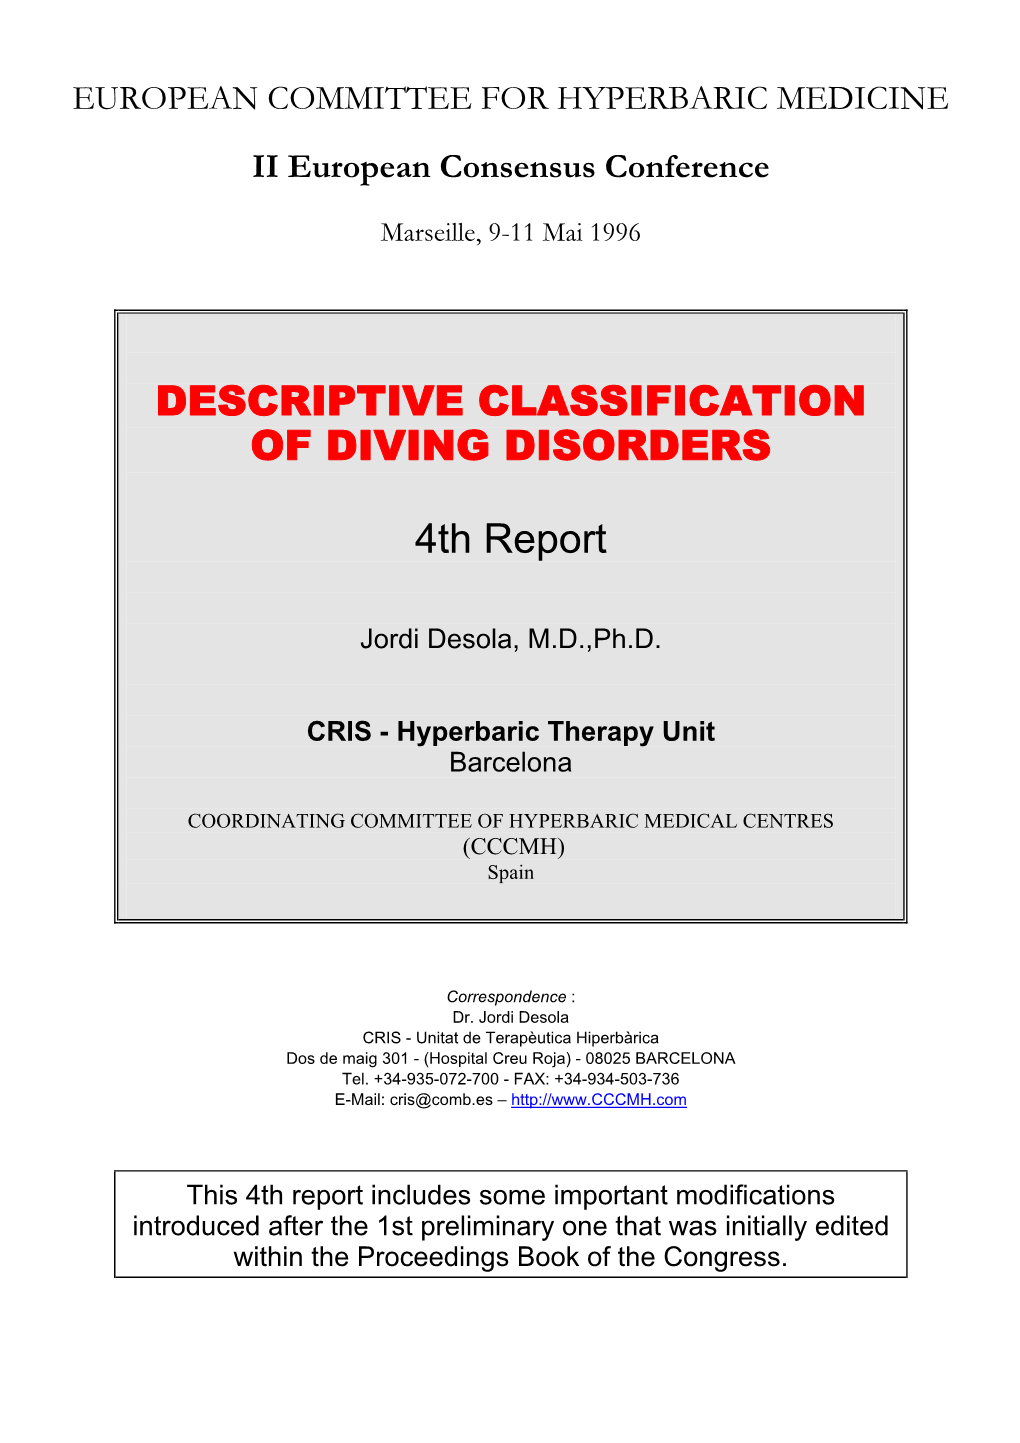 DESCRIPTIVE CLASSIFICATION of DIVING DISORDERS 4Th Report